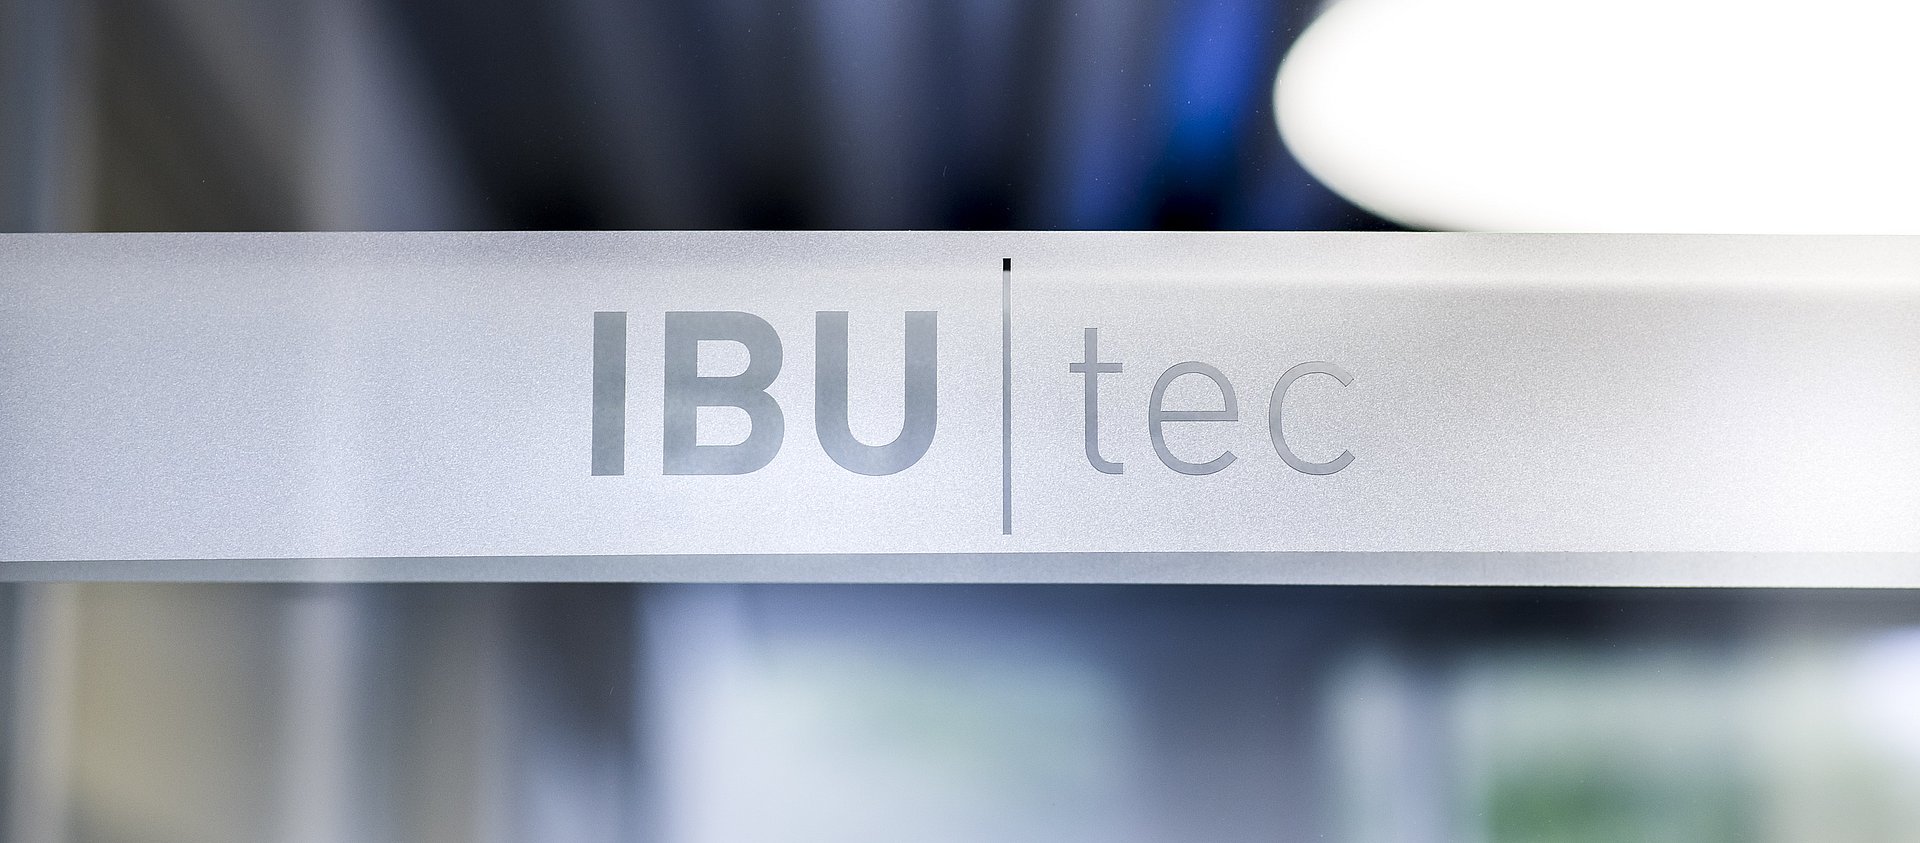 IBU-tec logo